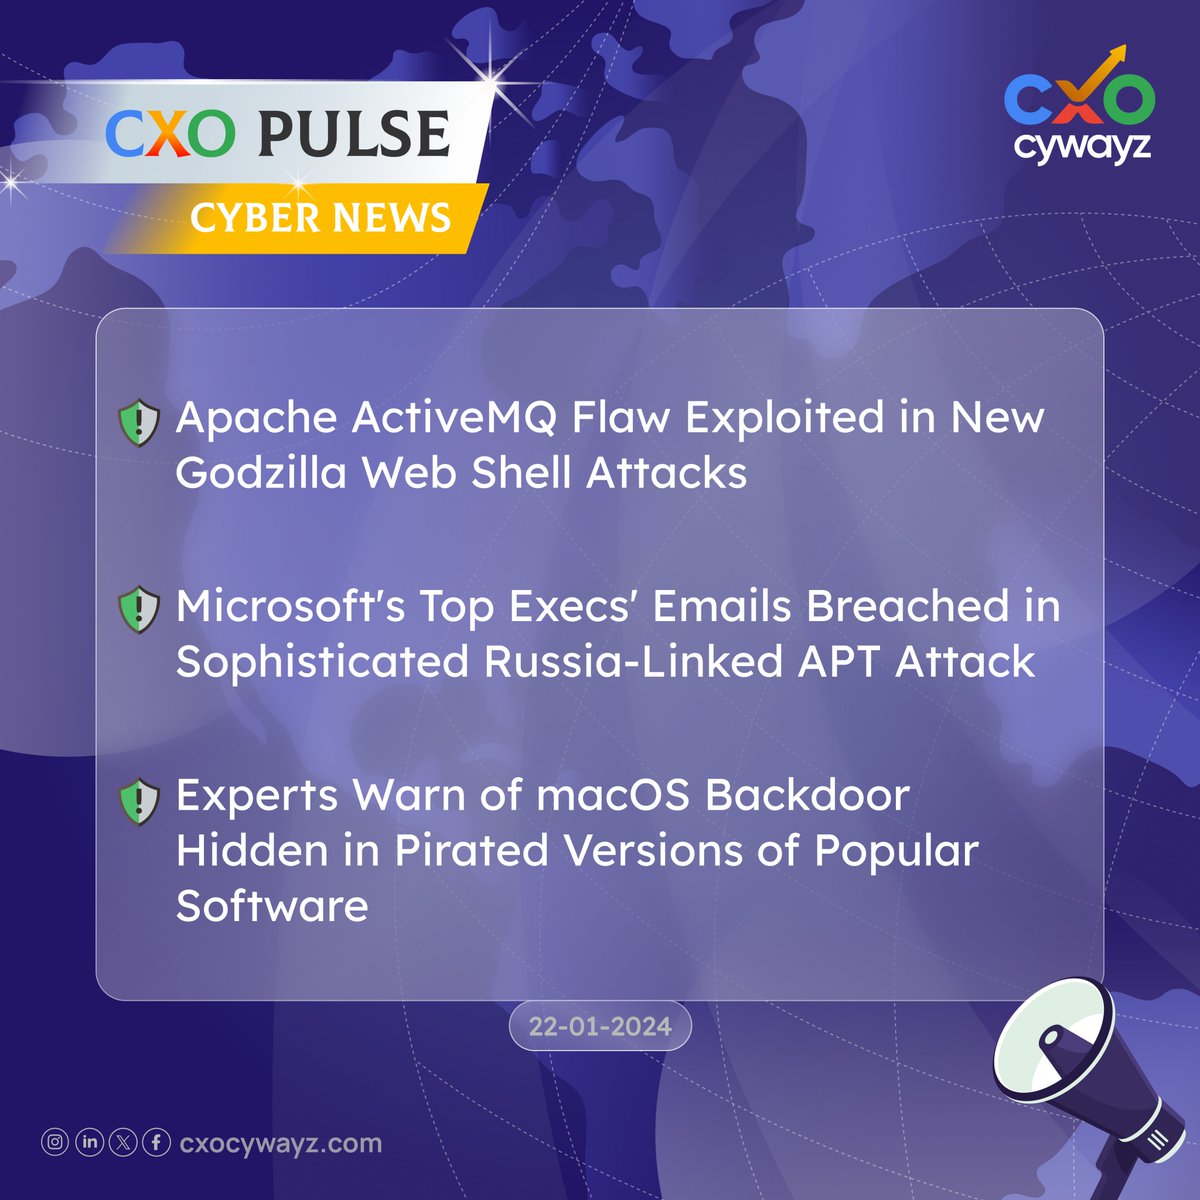 CXO PULSE Cyber News Headlines🚨

#cxopulse #cxocywayz #CyberSecurity #outlook #macOS